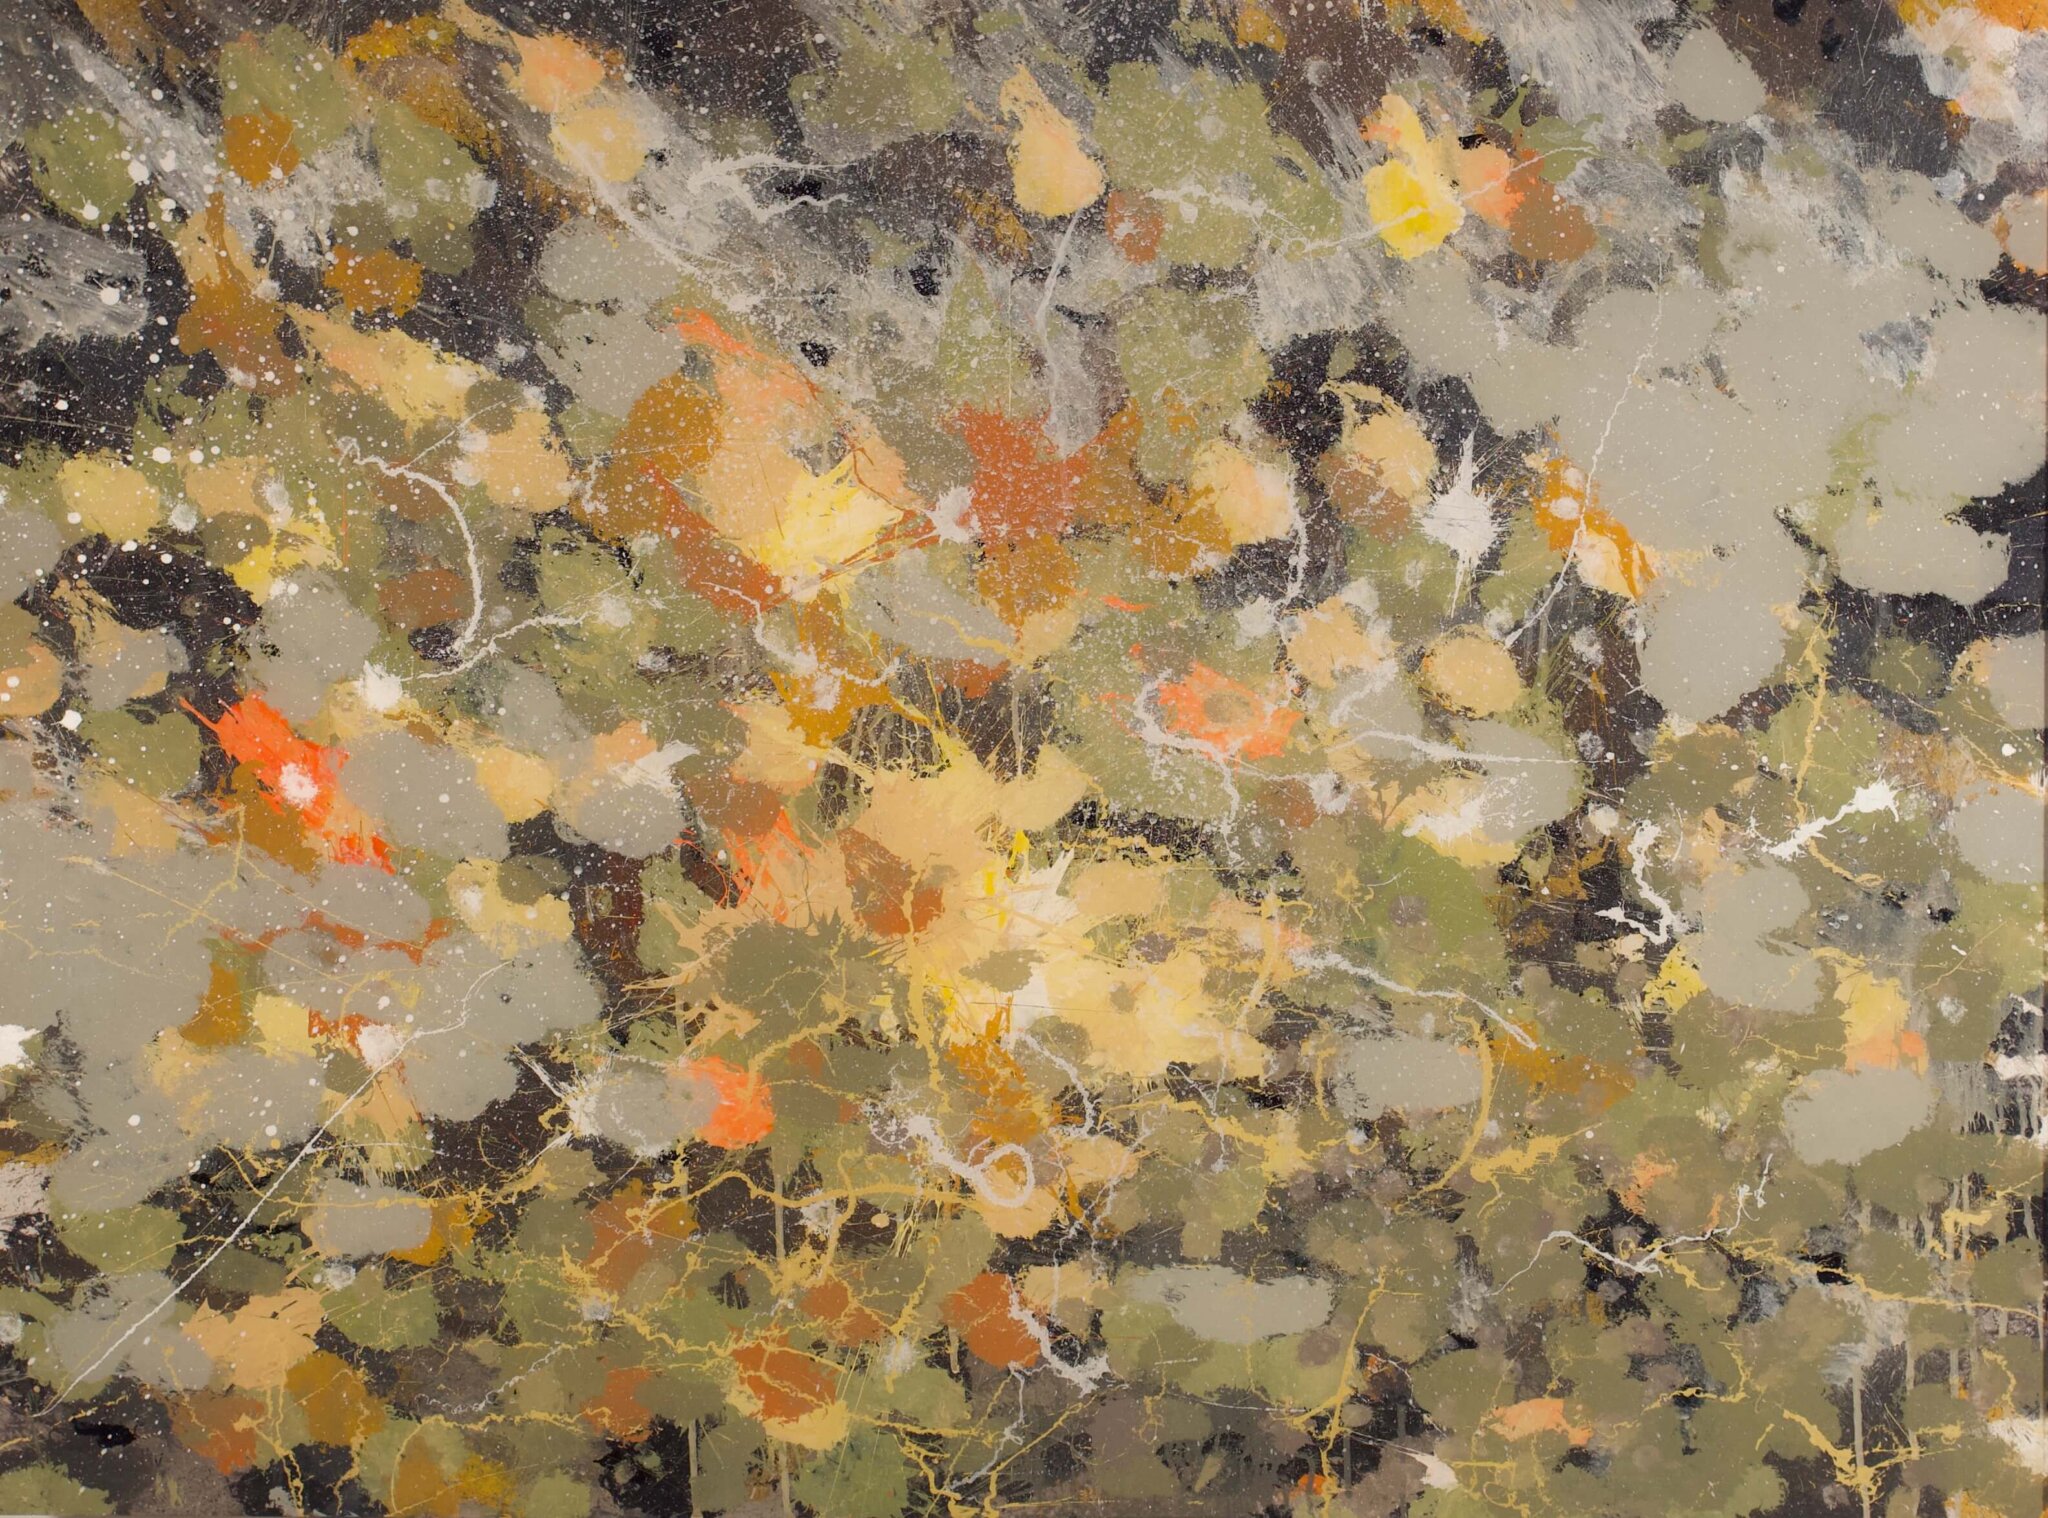 Ben Miller's "White Chuck River, WA" (March 21, 2023, acrylic on polycarbonate, 36" x 48")